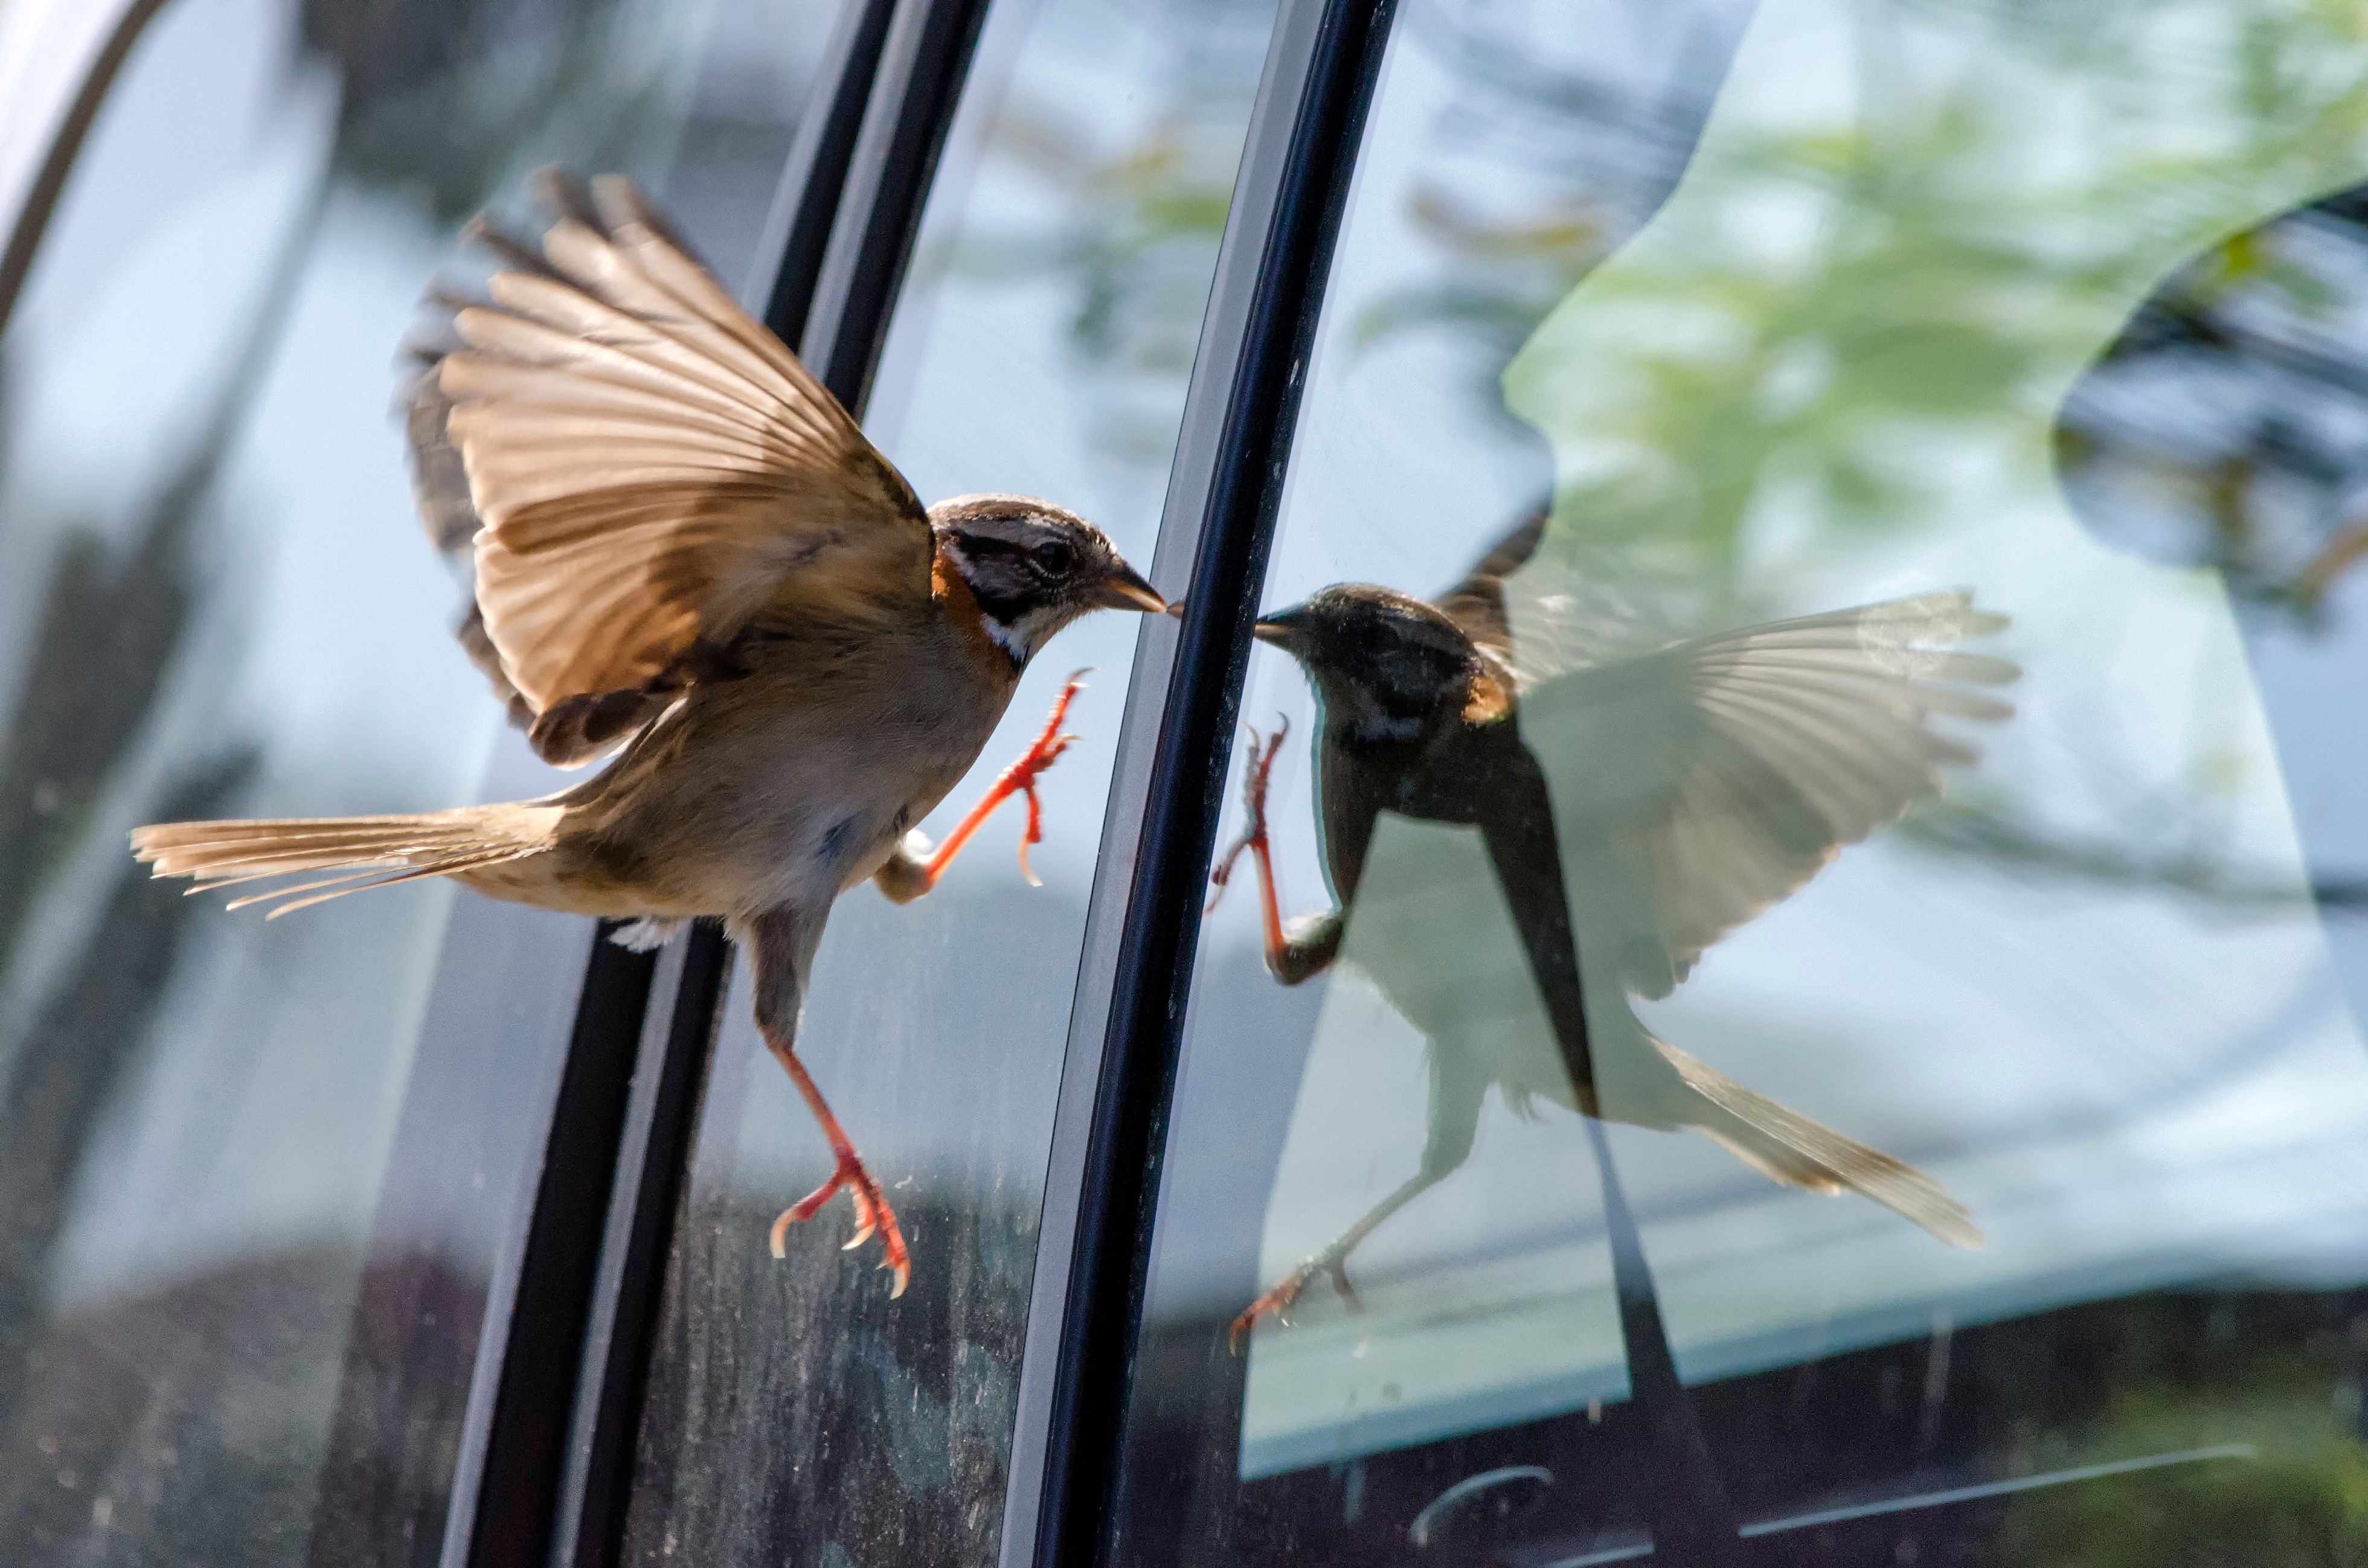 When Birds Hit Windows - How to Help